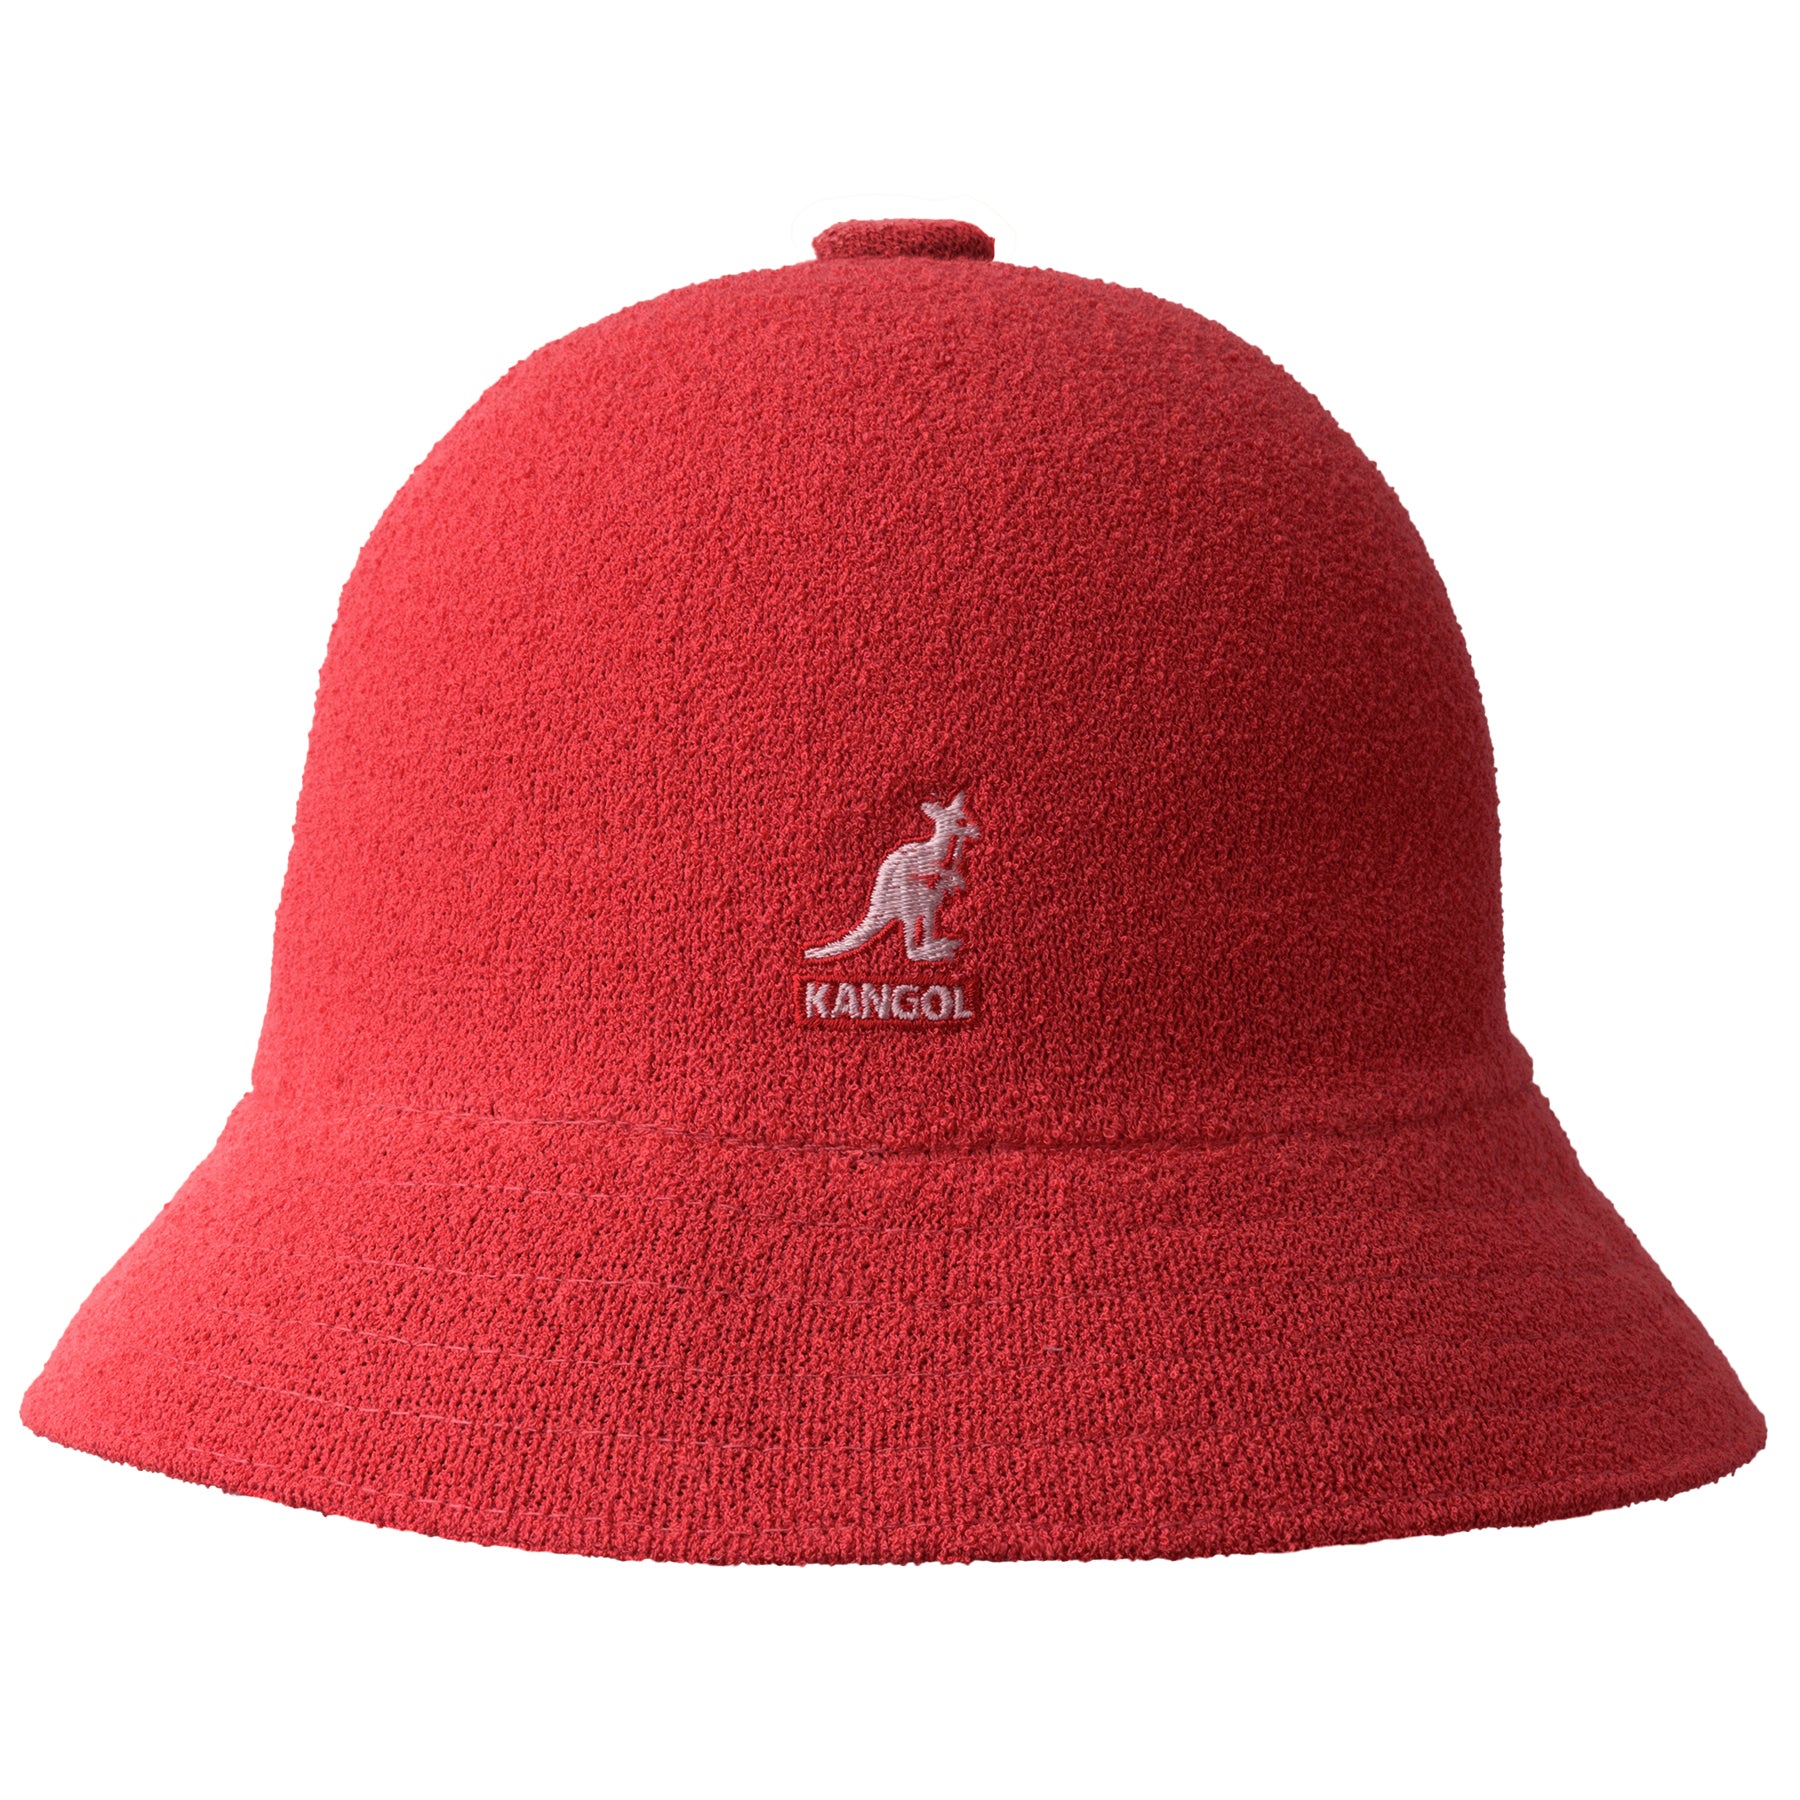 Men's Kangol - Bermuda Casual Red Hat